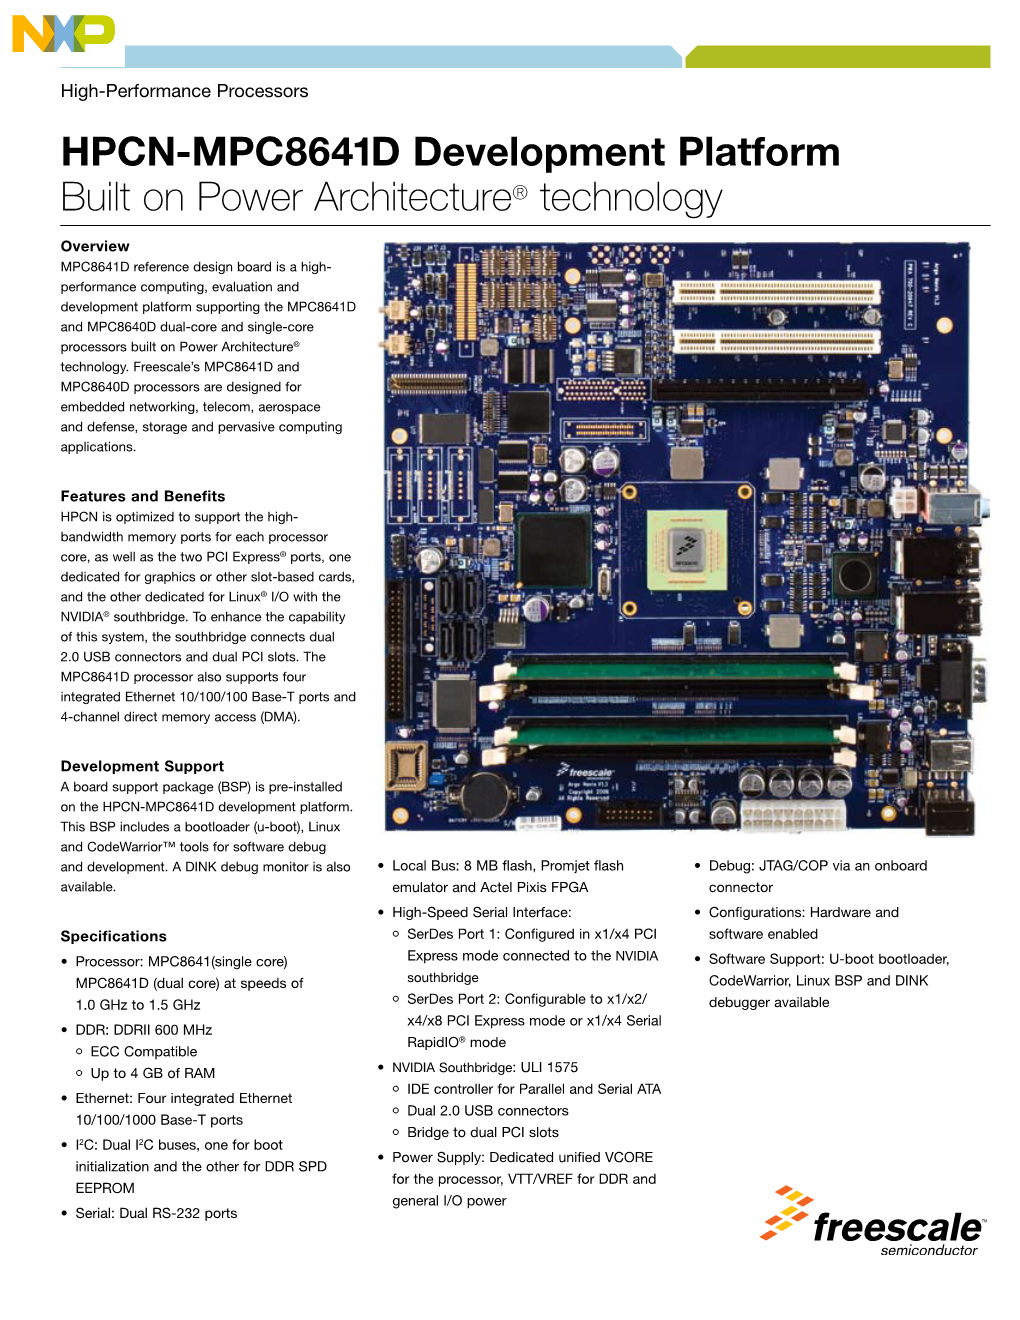 HPCN-MPC8641D Development Platform Built on Power Architecture® Technology